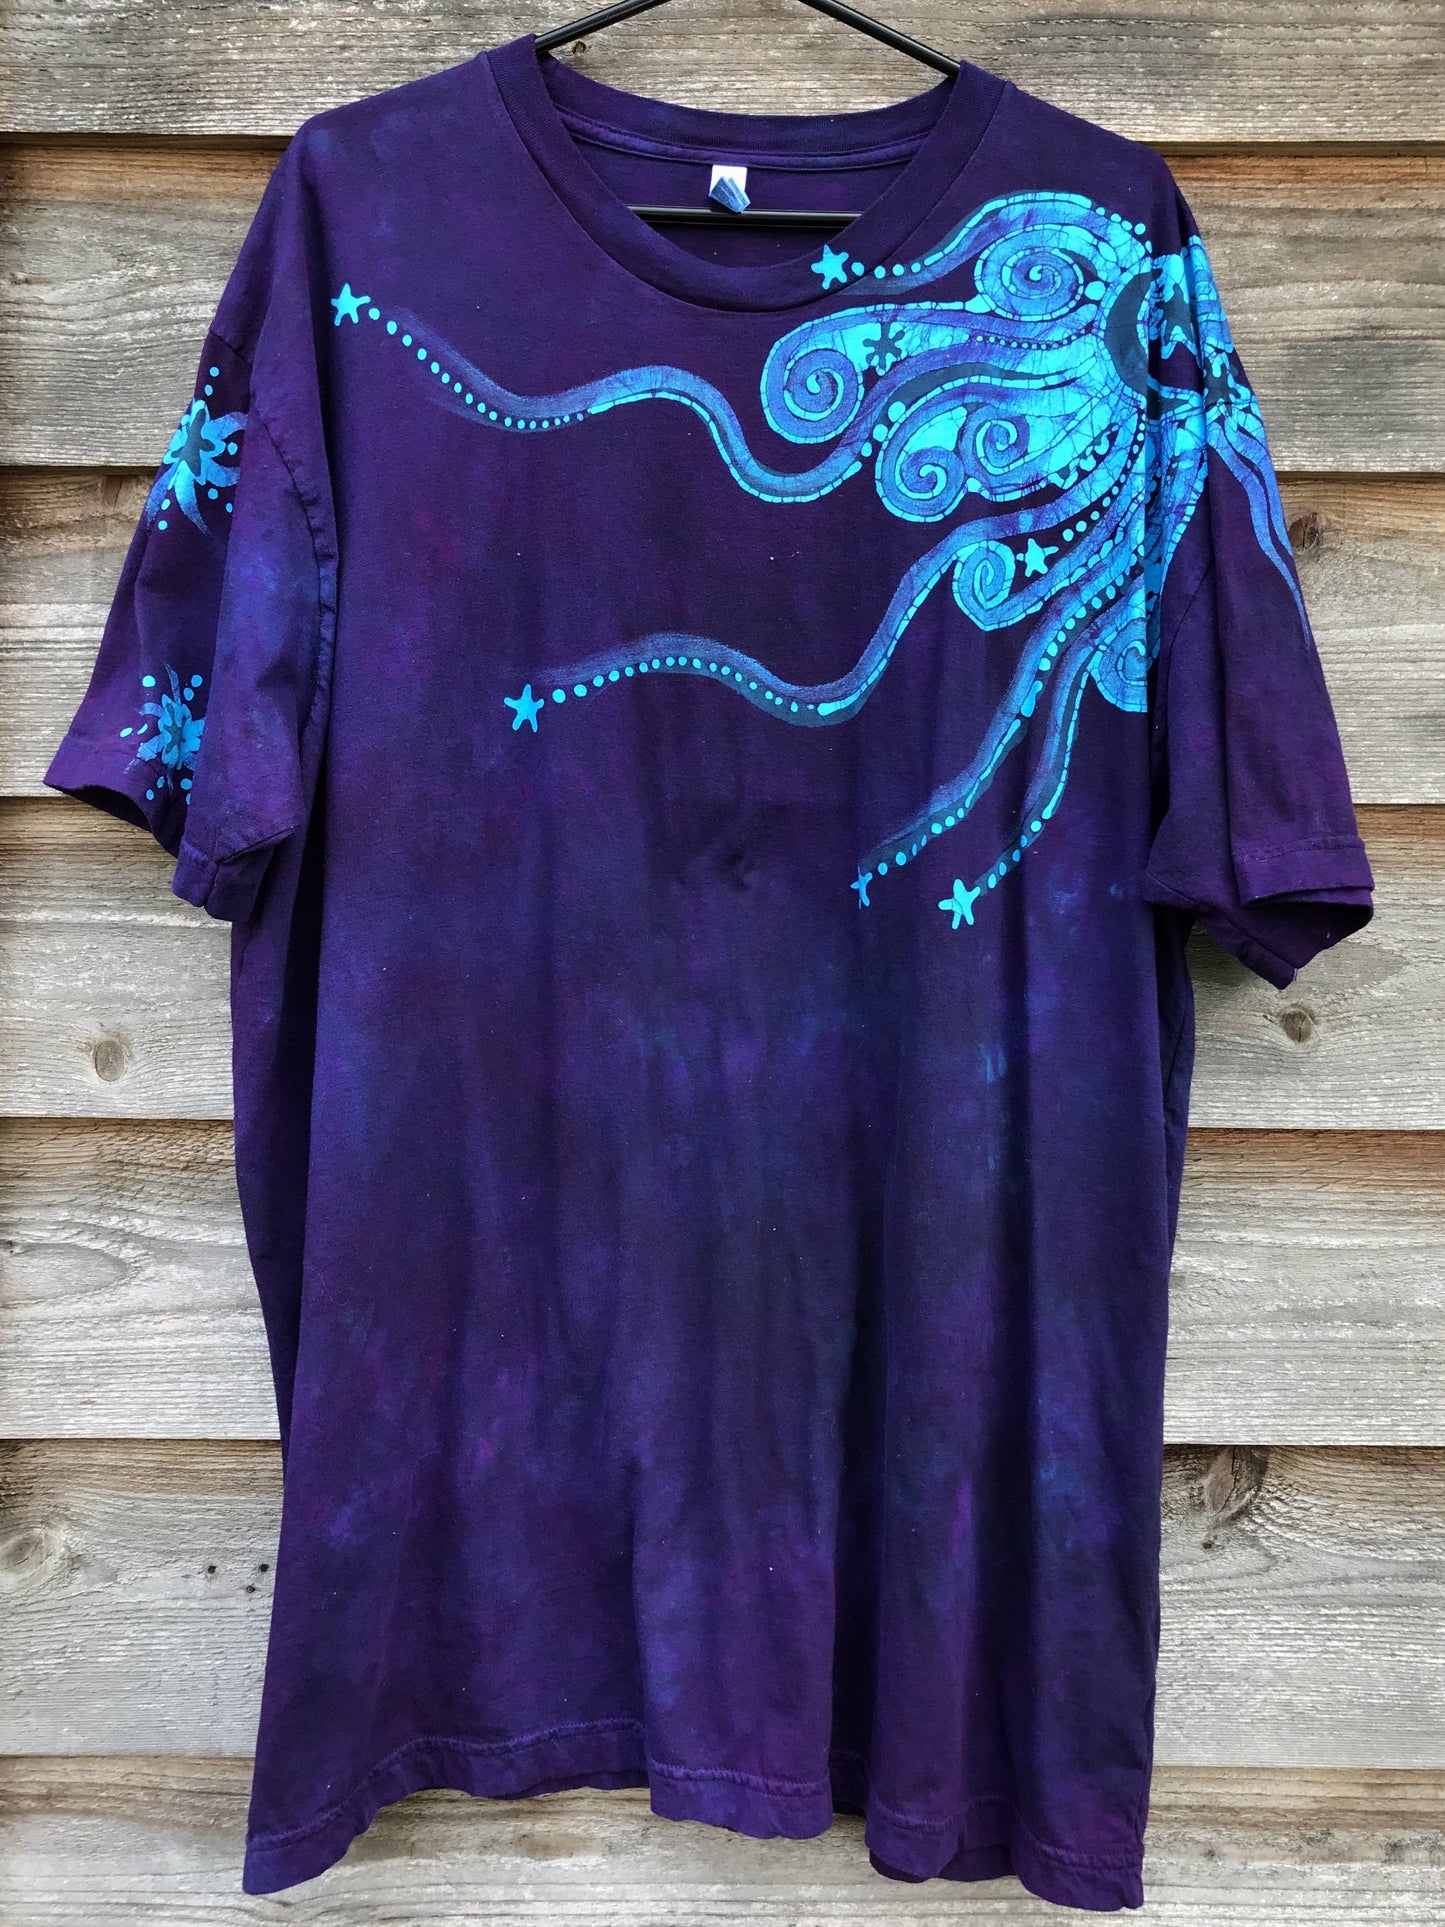 Midnight Moondance Handmade Batik Tshirt - Size 3X - Tall